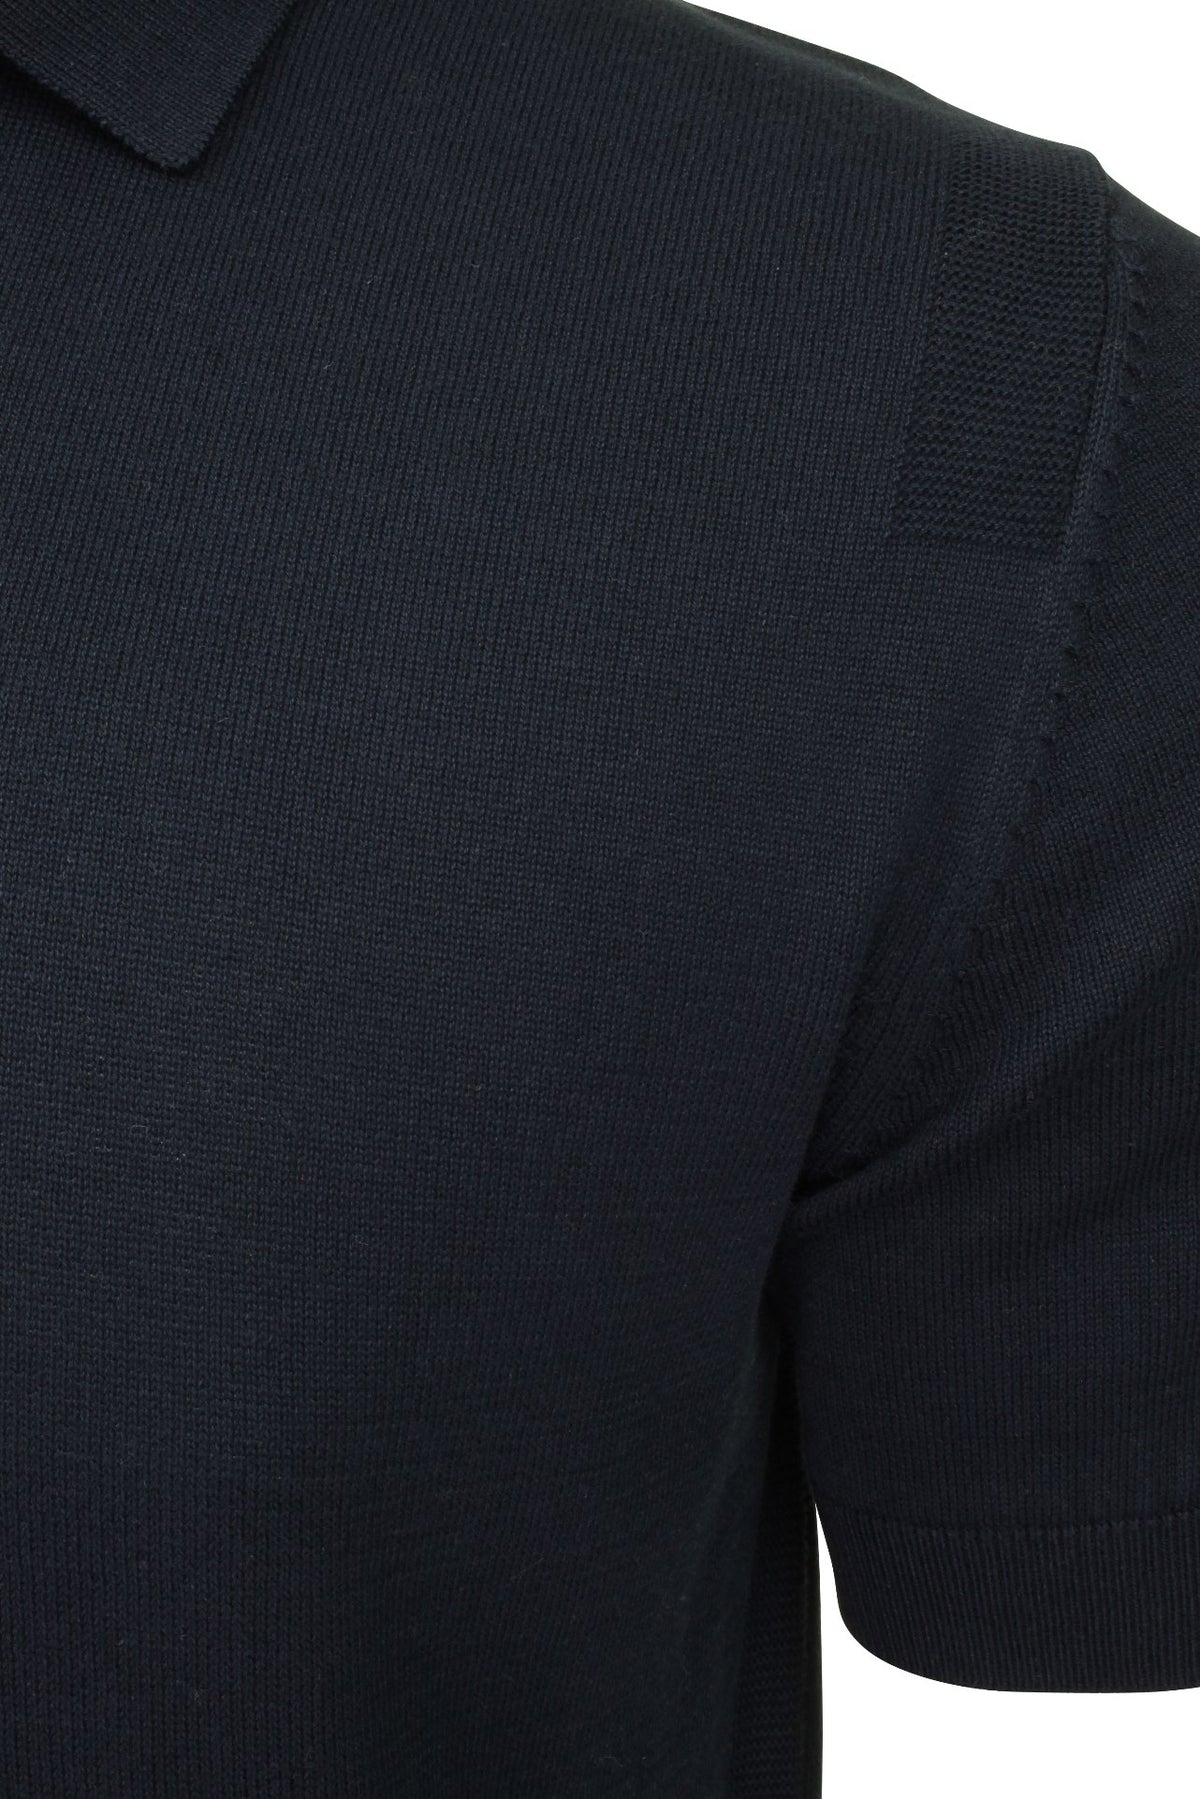 Ben Sherman Mens Signature Knitted Polo T-Shirt - Short Sleeved (Dark Navy, S), 02, 59709, Dark Navy